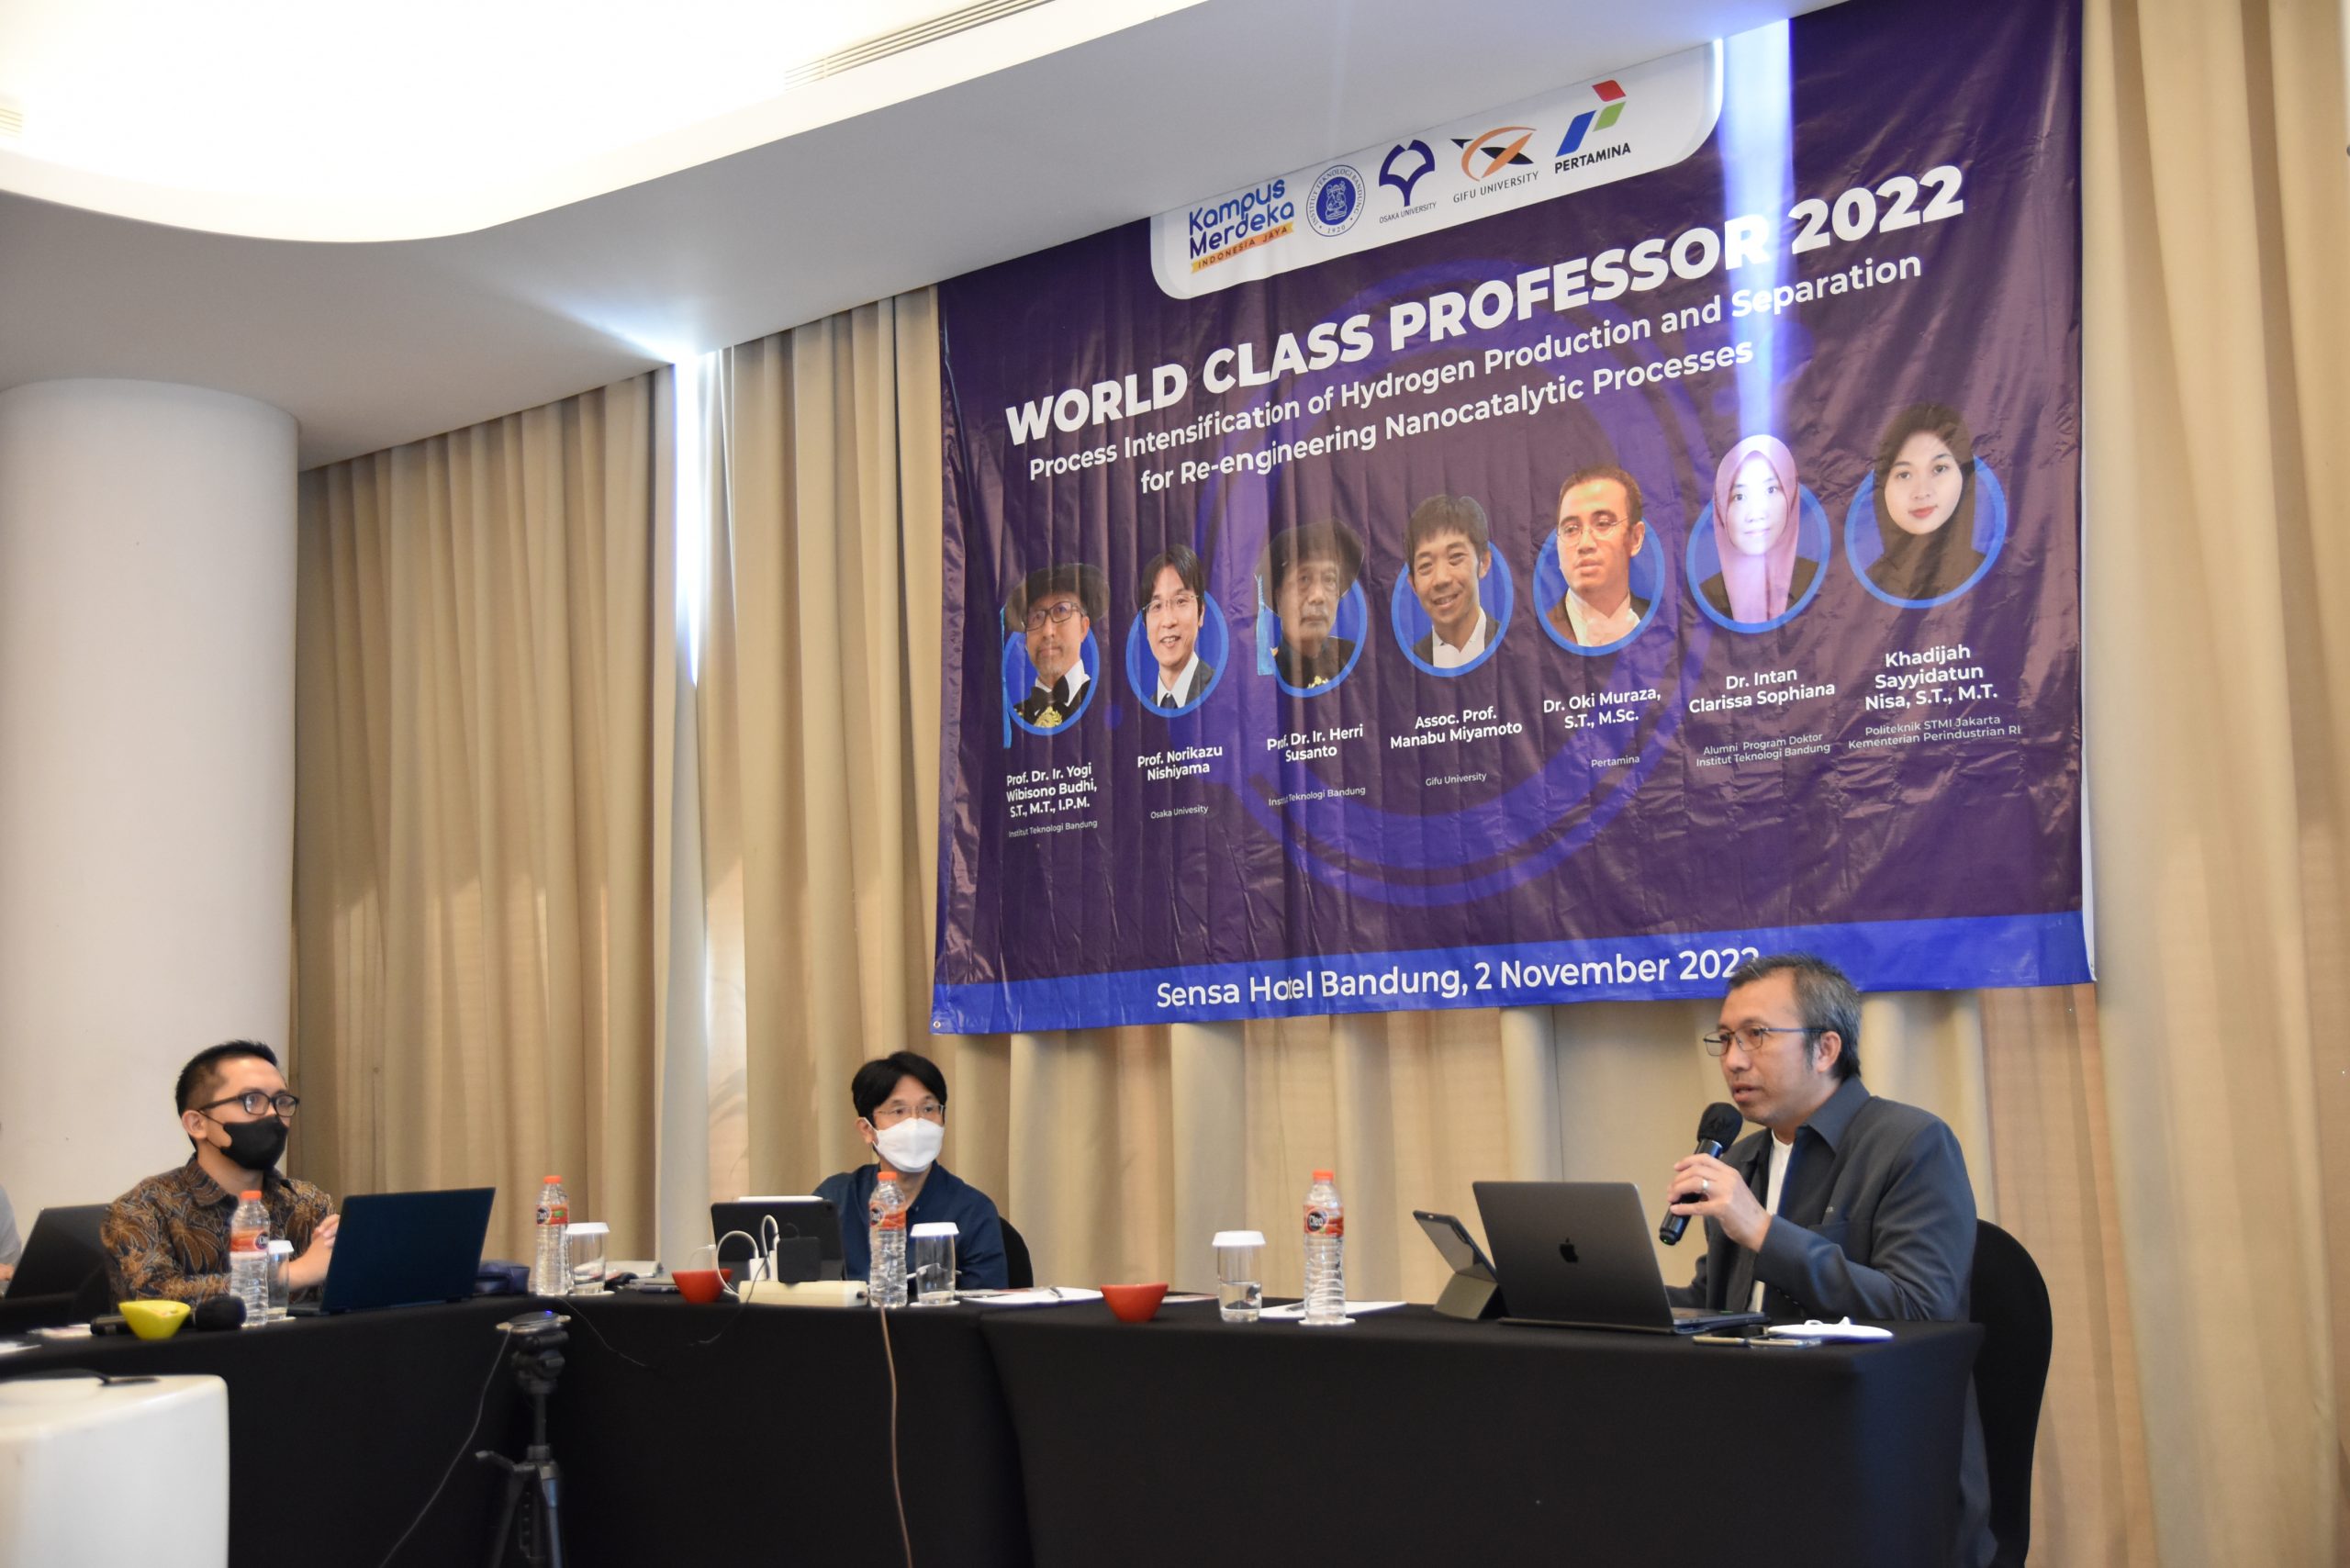 Hybrid Seminar World Class Professor 2022